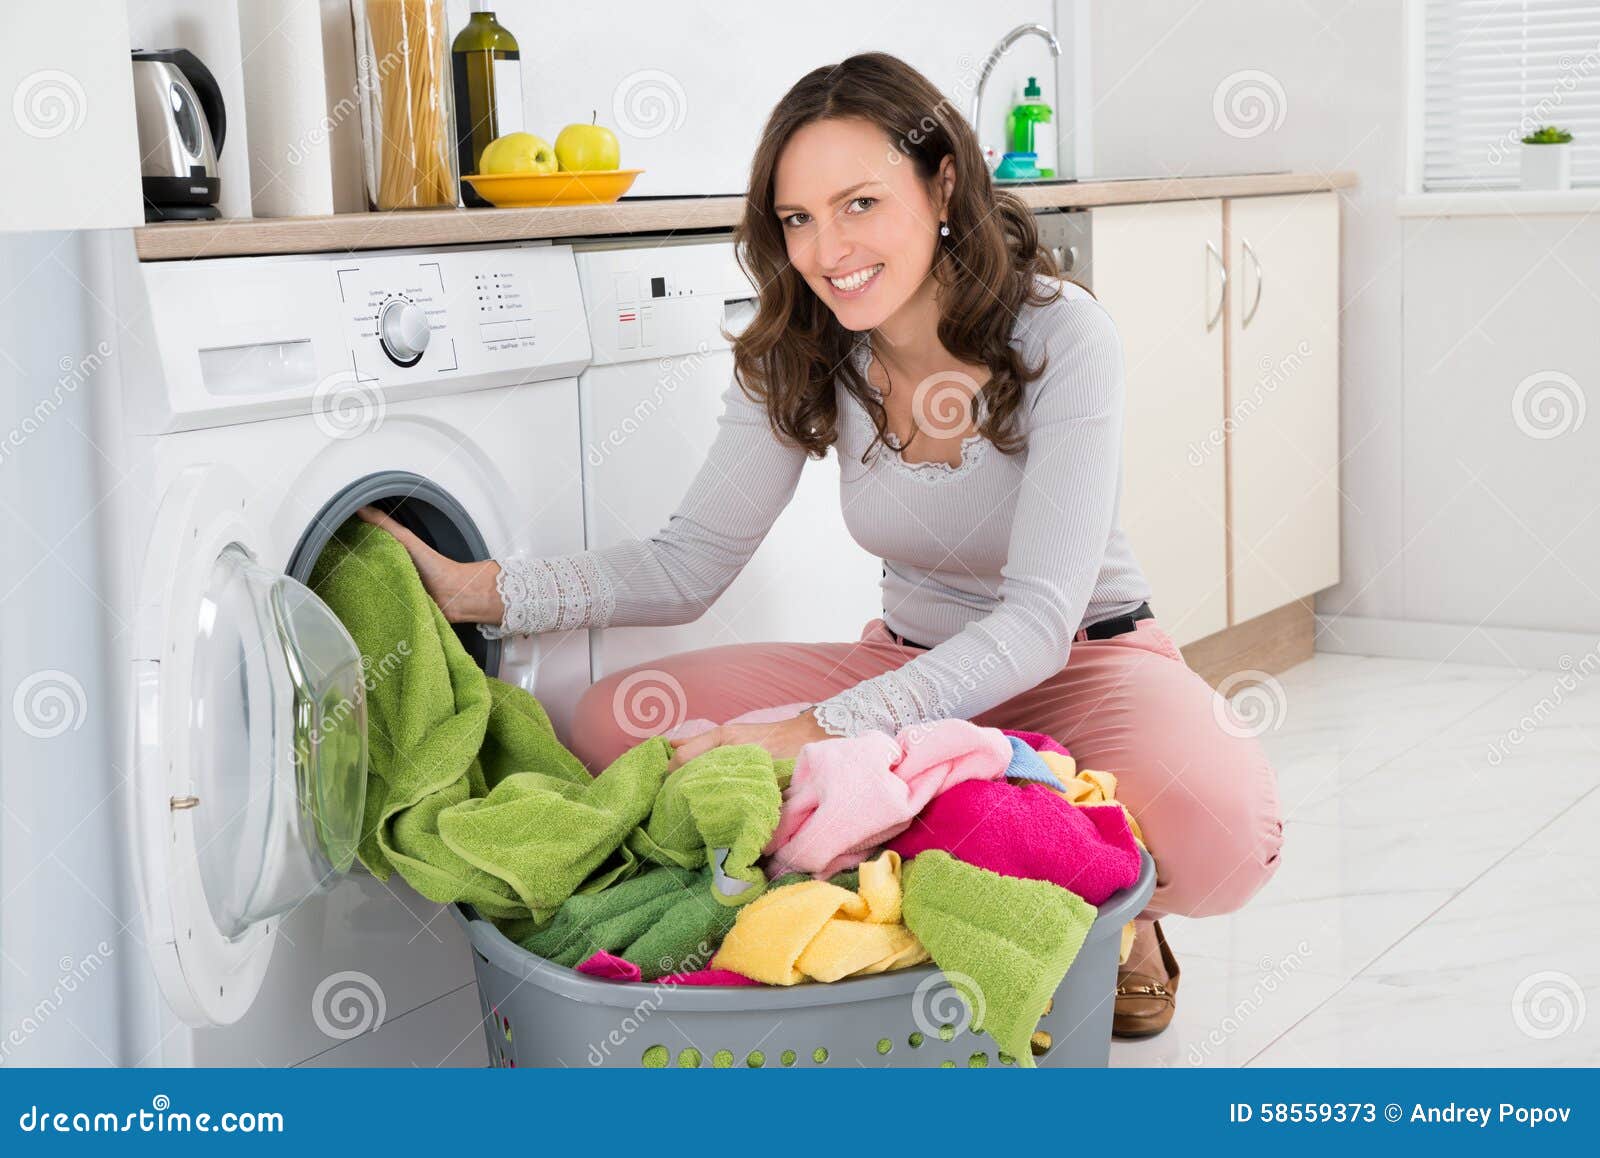 woman putting clothes into washing machine